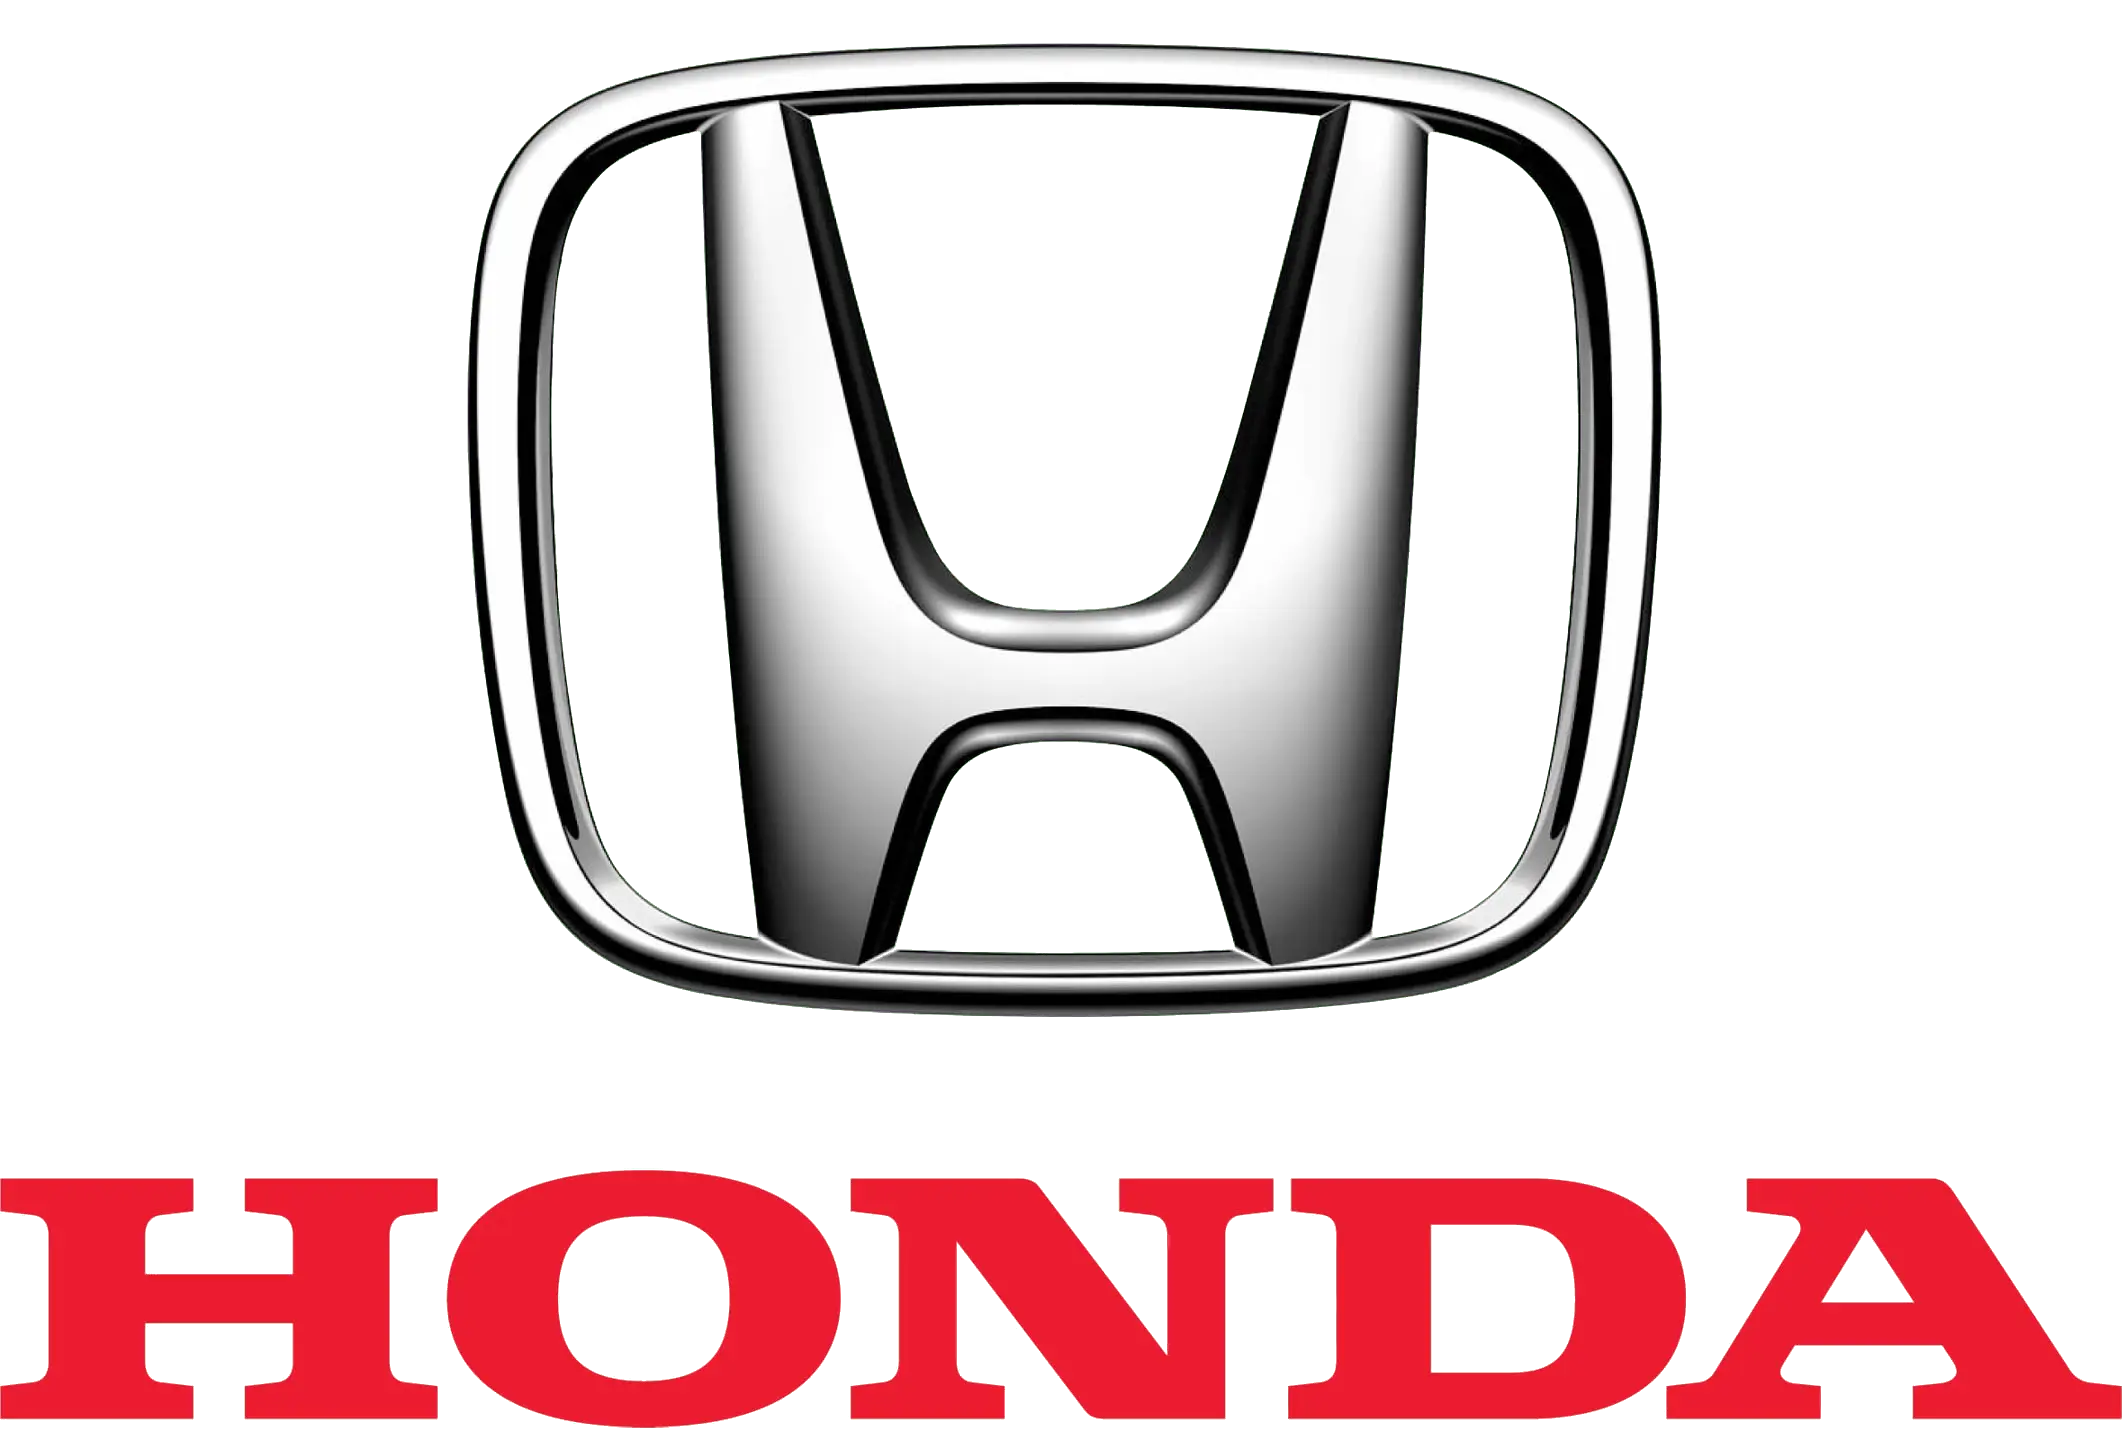 Honday logo